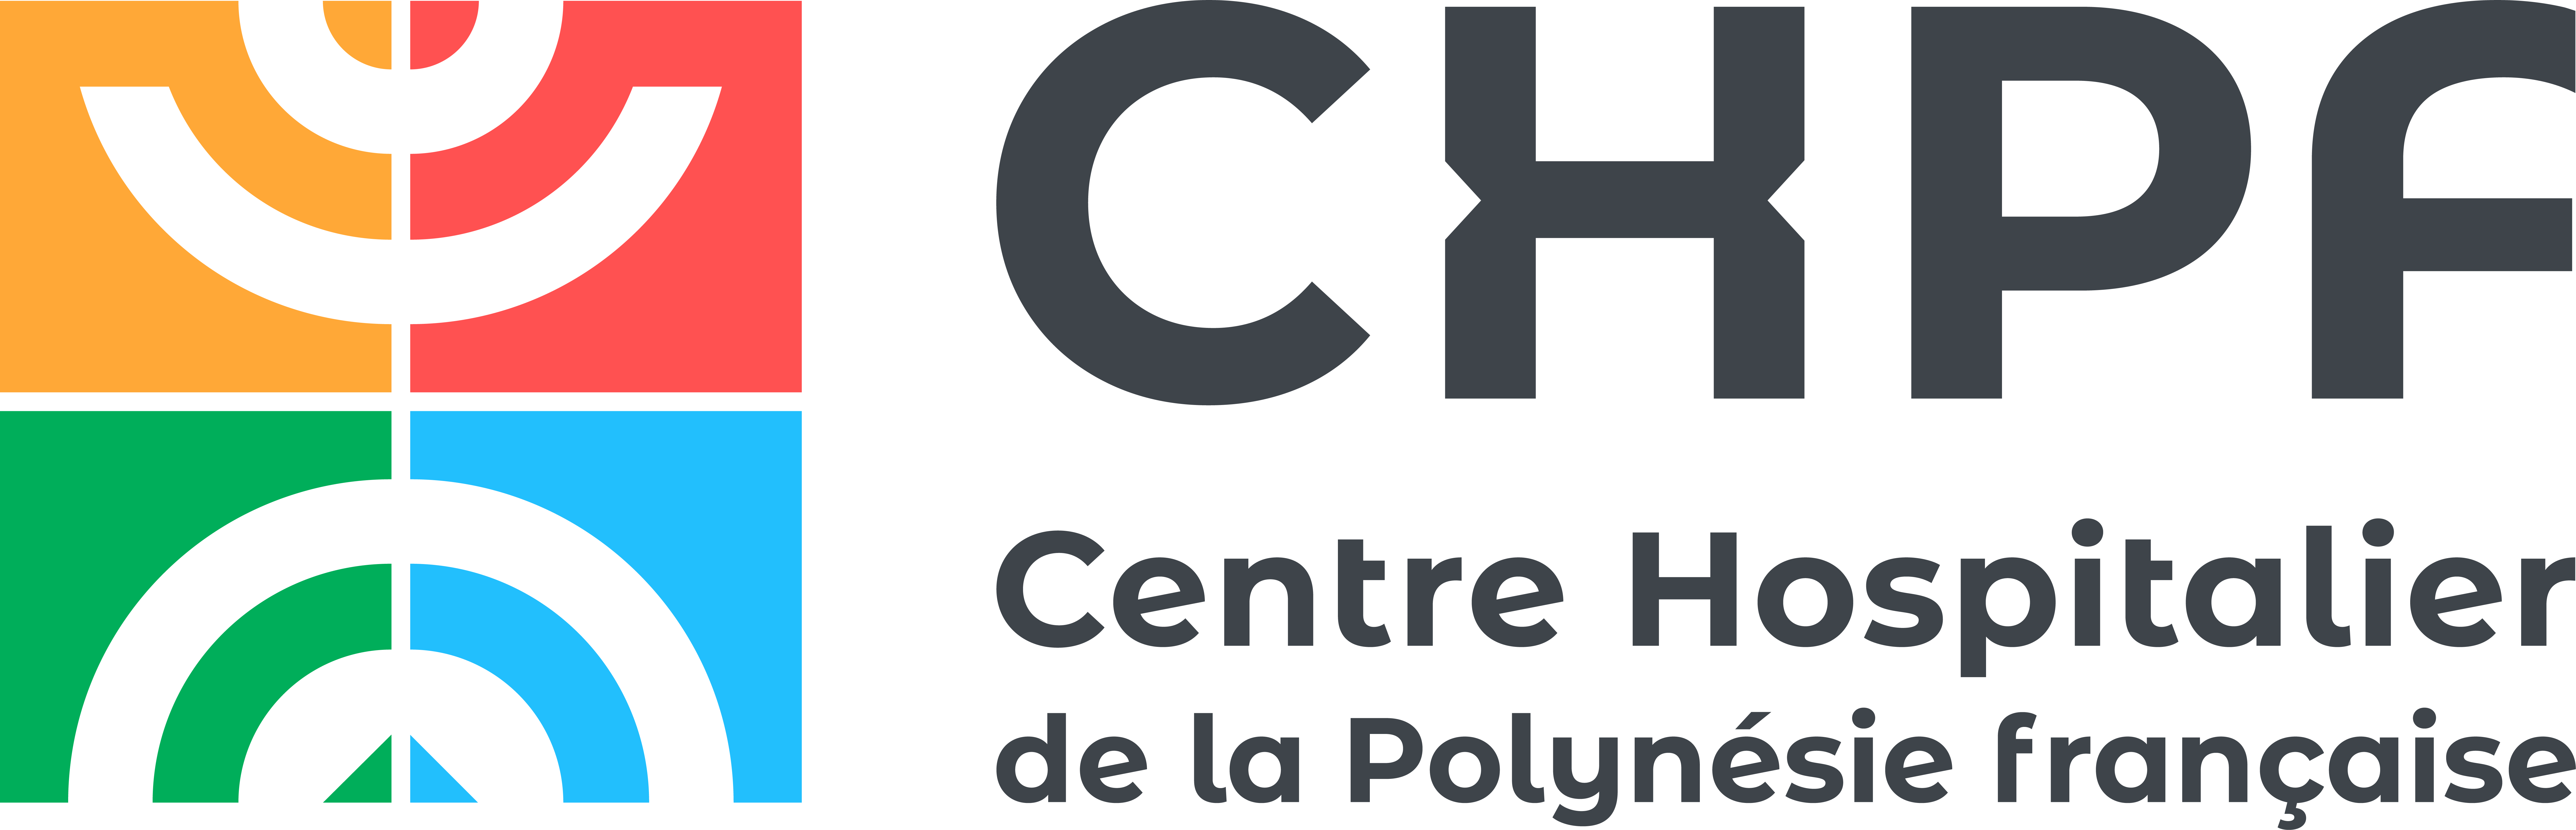 CENTRE HOSPITALIER DE LA POLYNESIE FRANCAISE